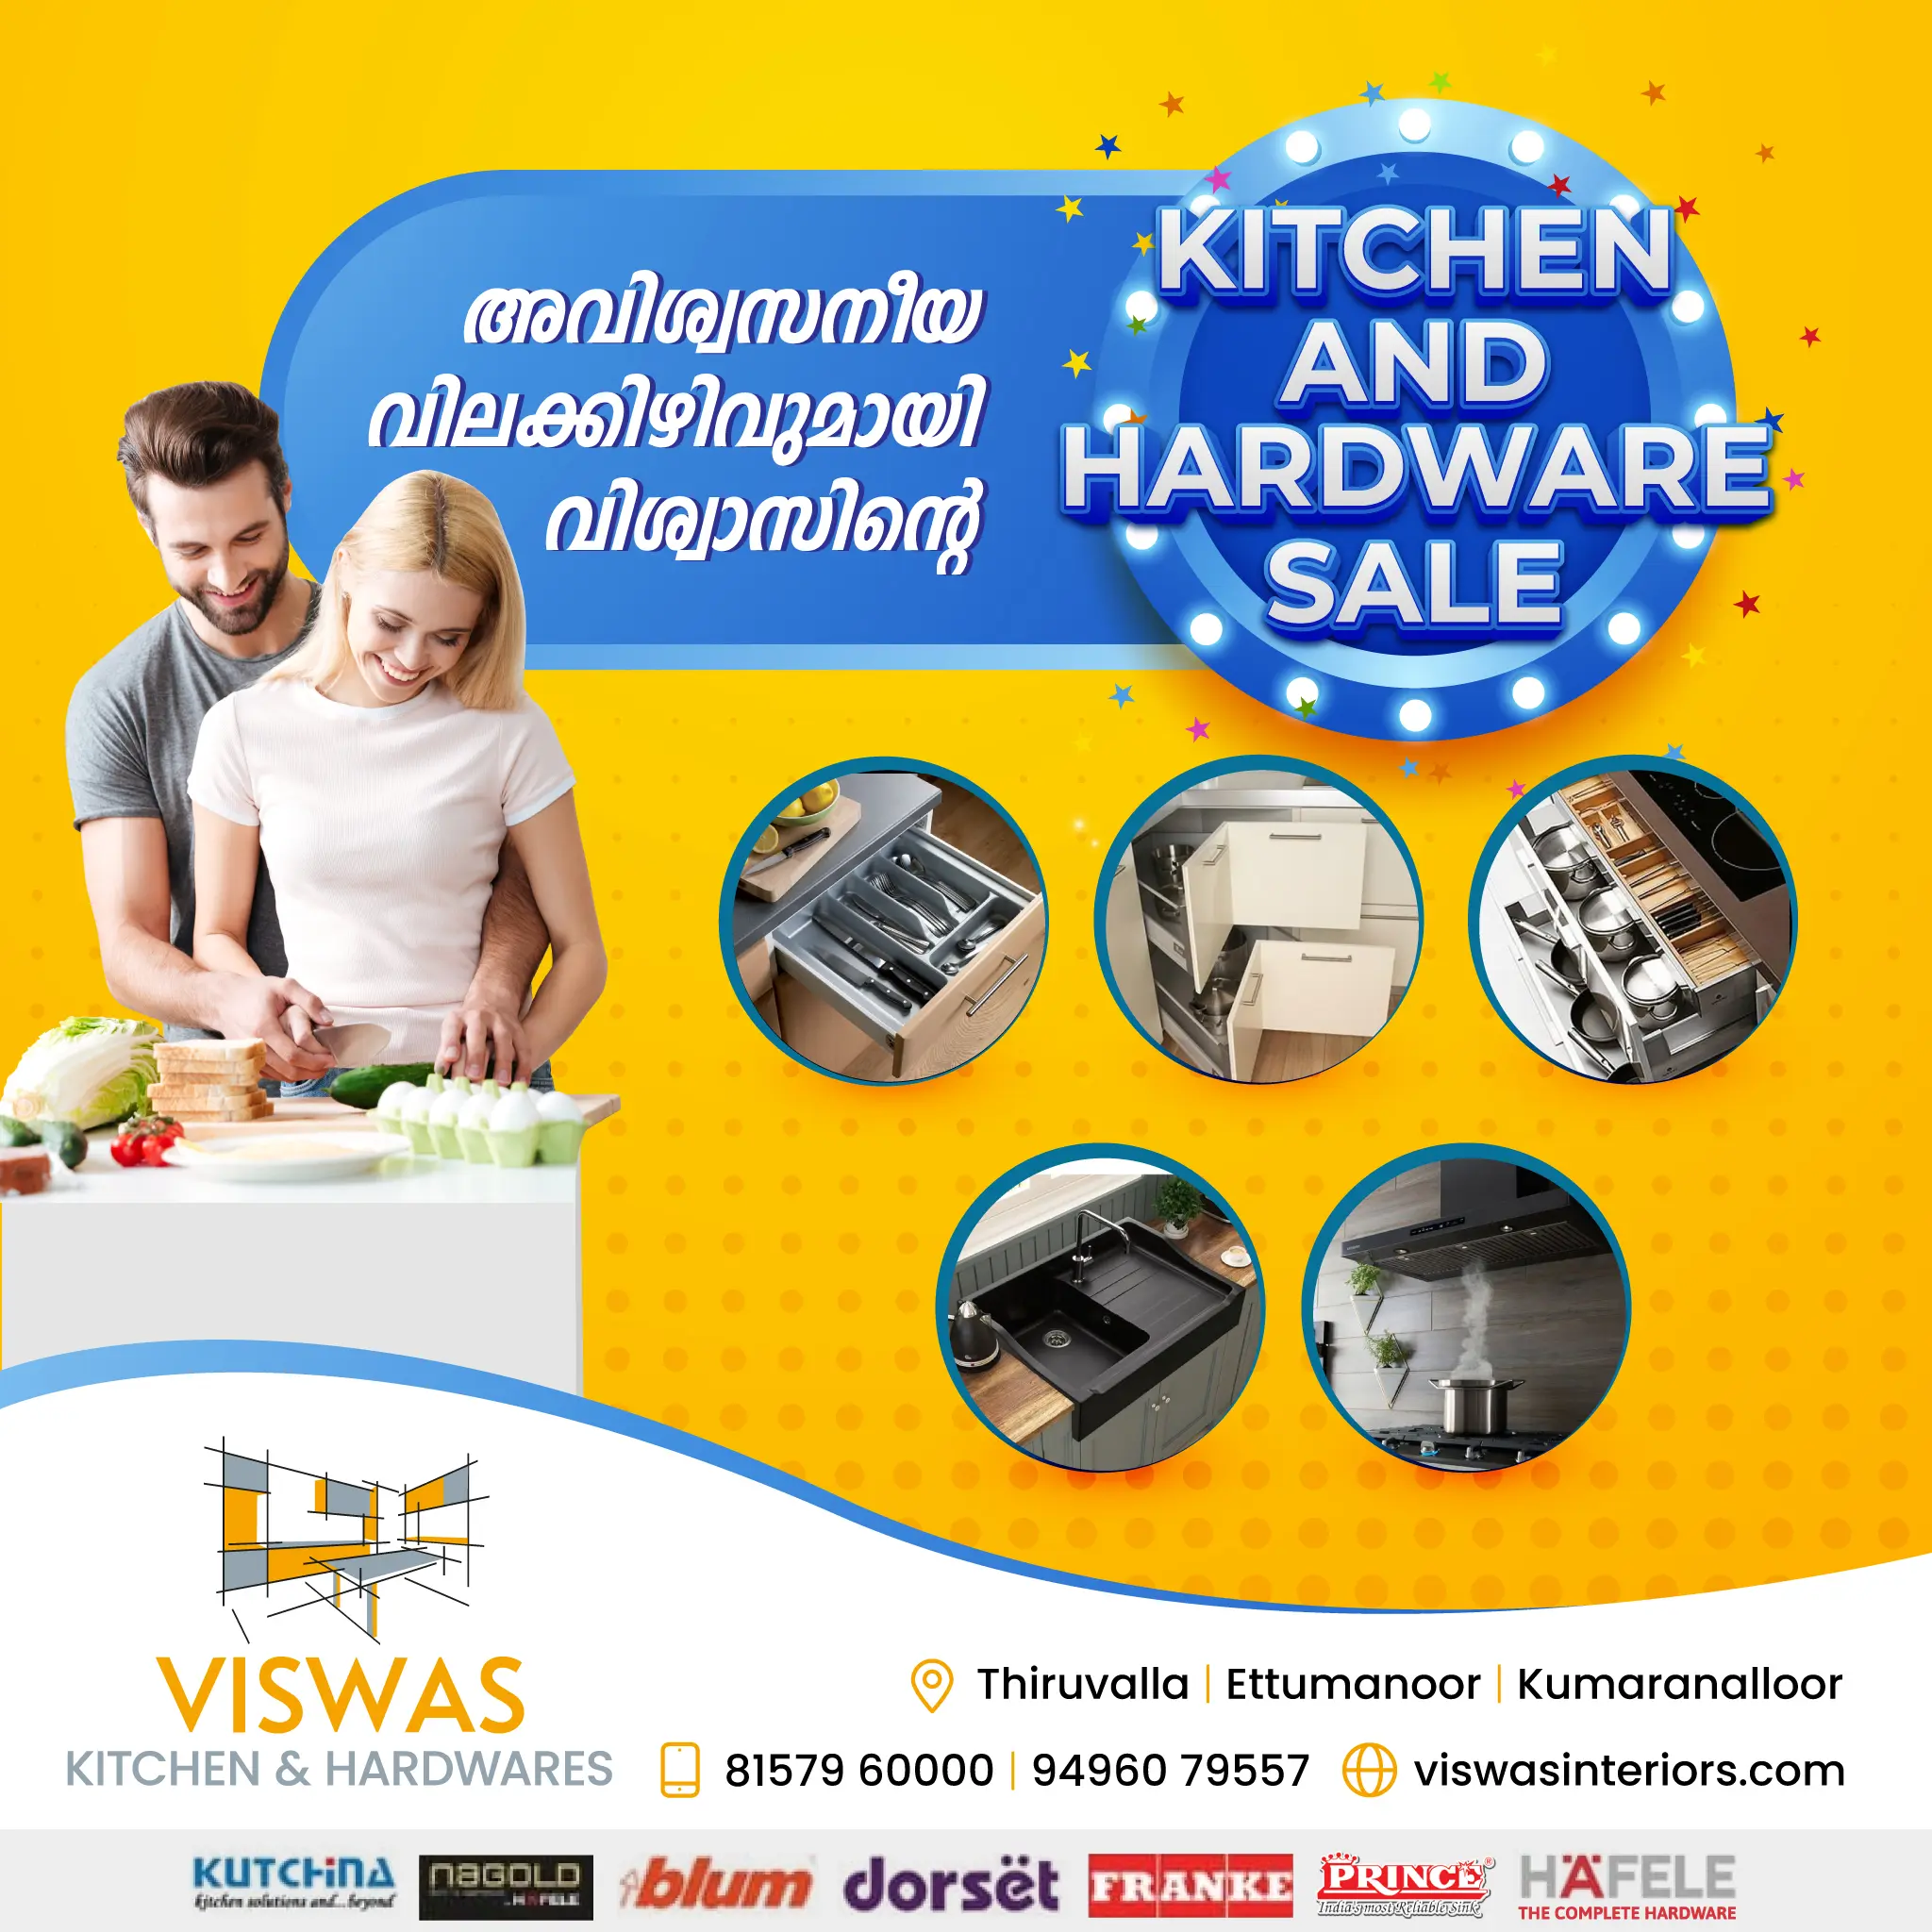 Viswas Kitchen and Hardware Offer Sale 